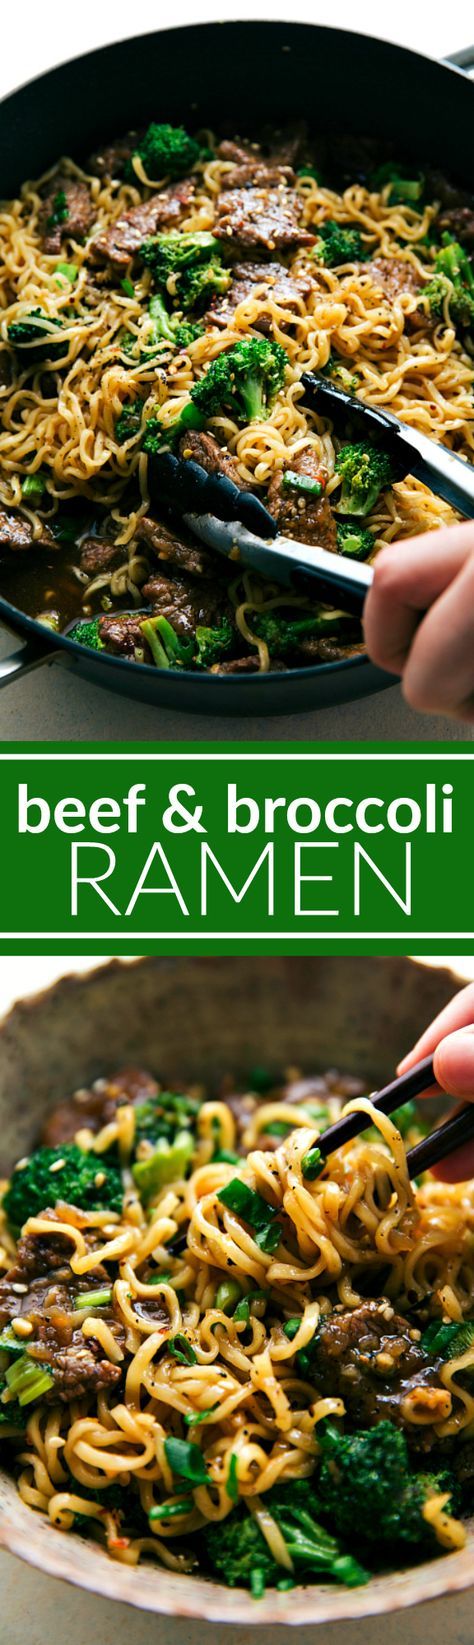 Skillet Beef and Broccoli Ramen